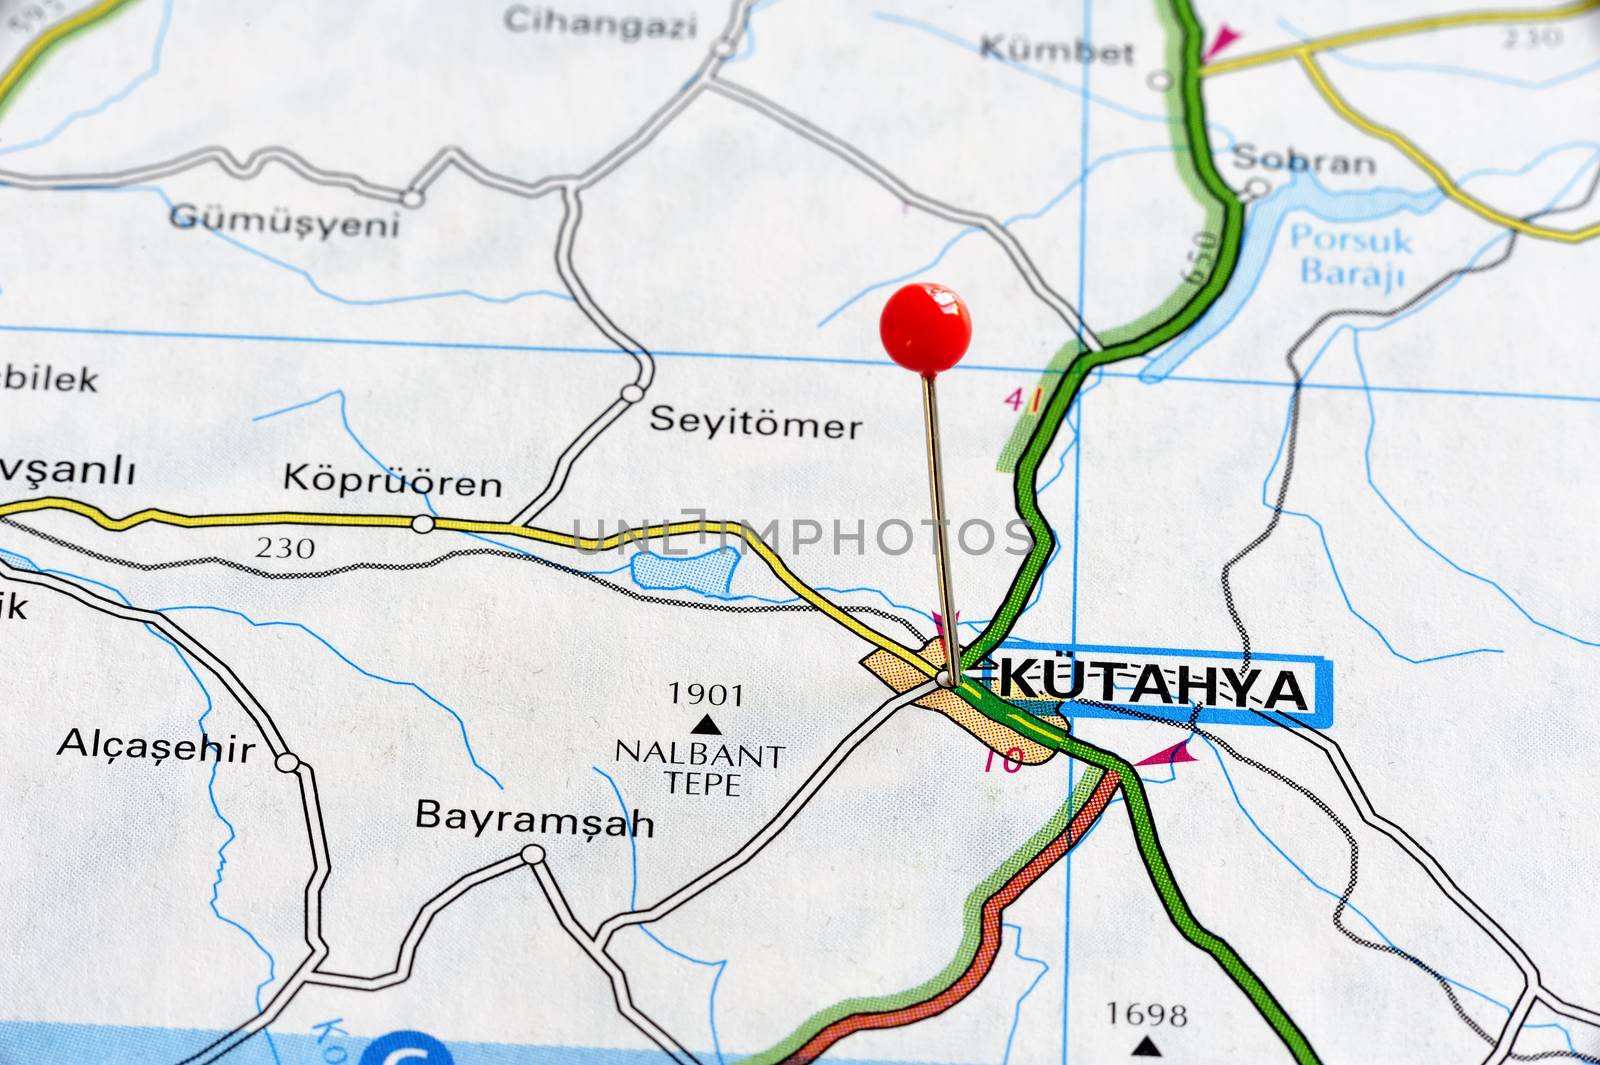 Travel destination Kutahya by a40757